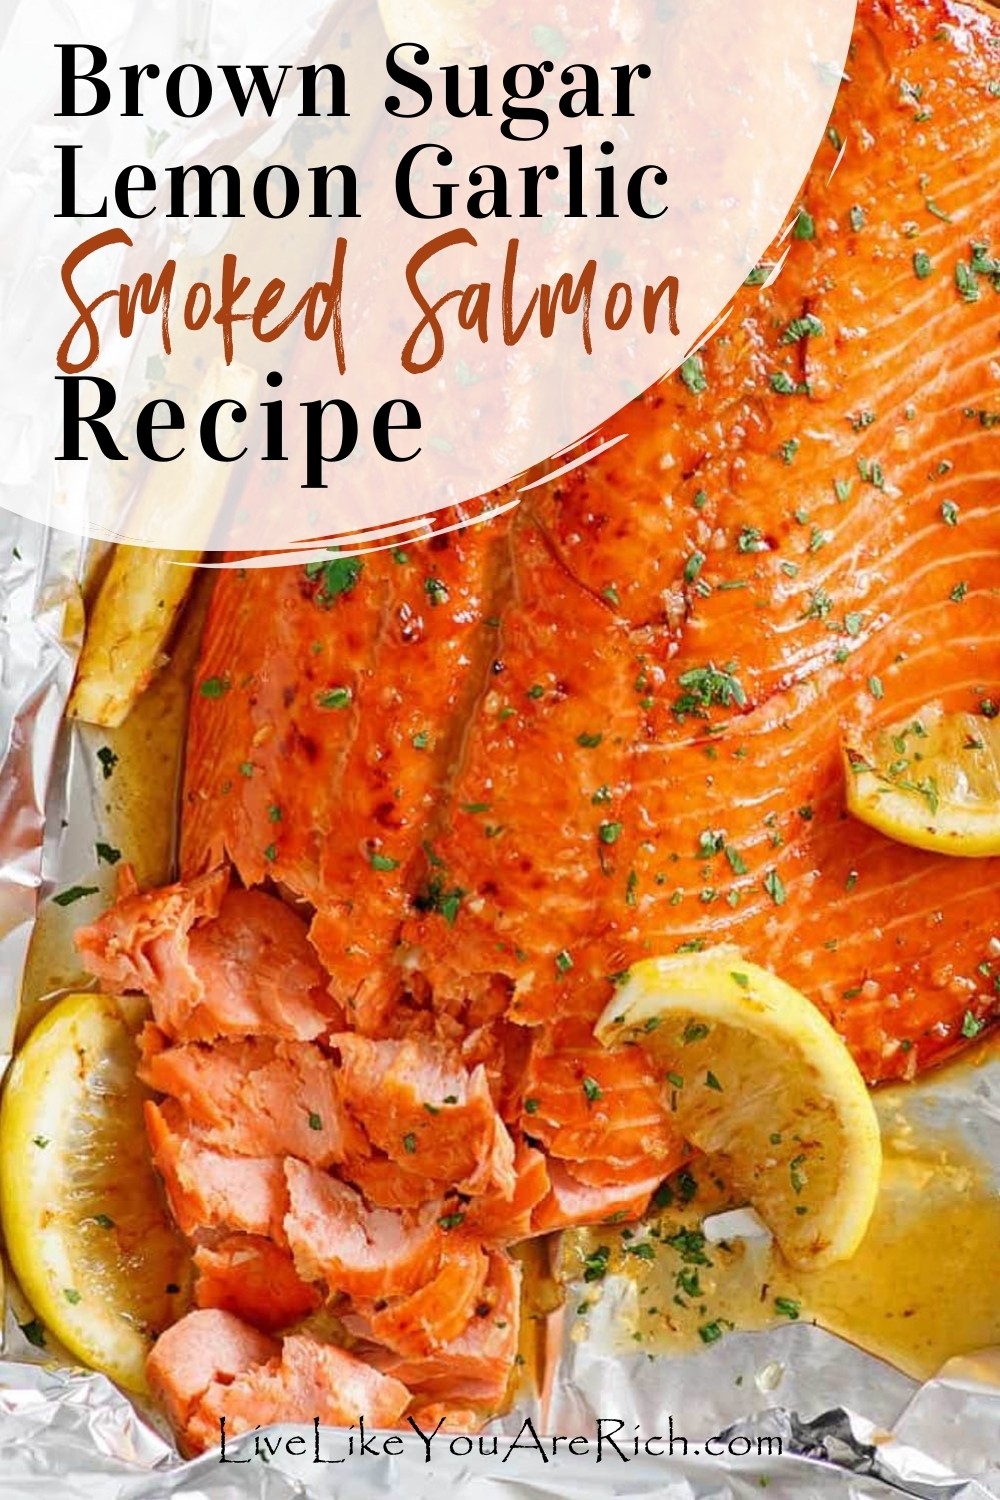 https://livelikeyouarerich.com/wp-content/uploads/2021/01/lemon-garlic-smoked-salmon.jpg